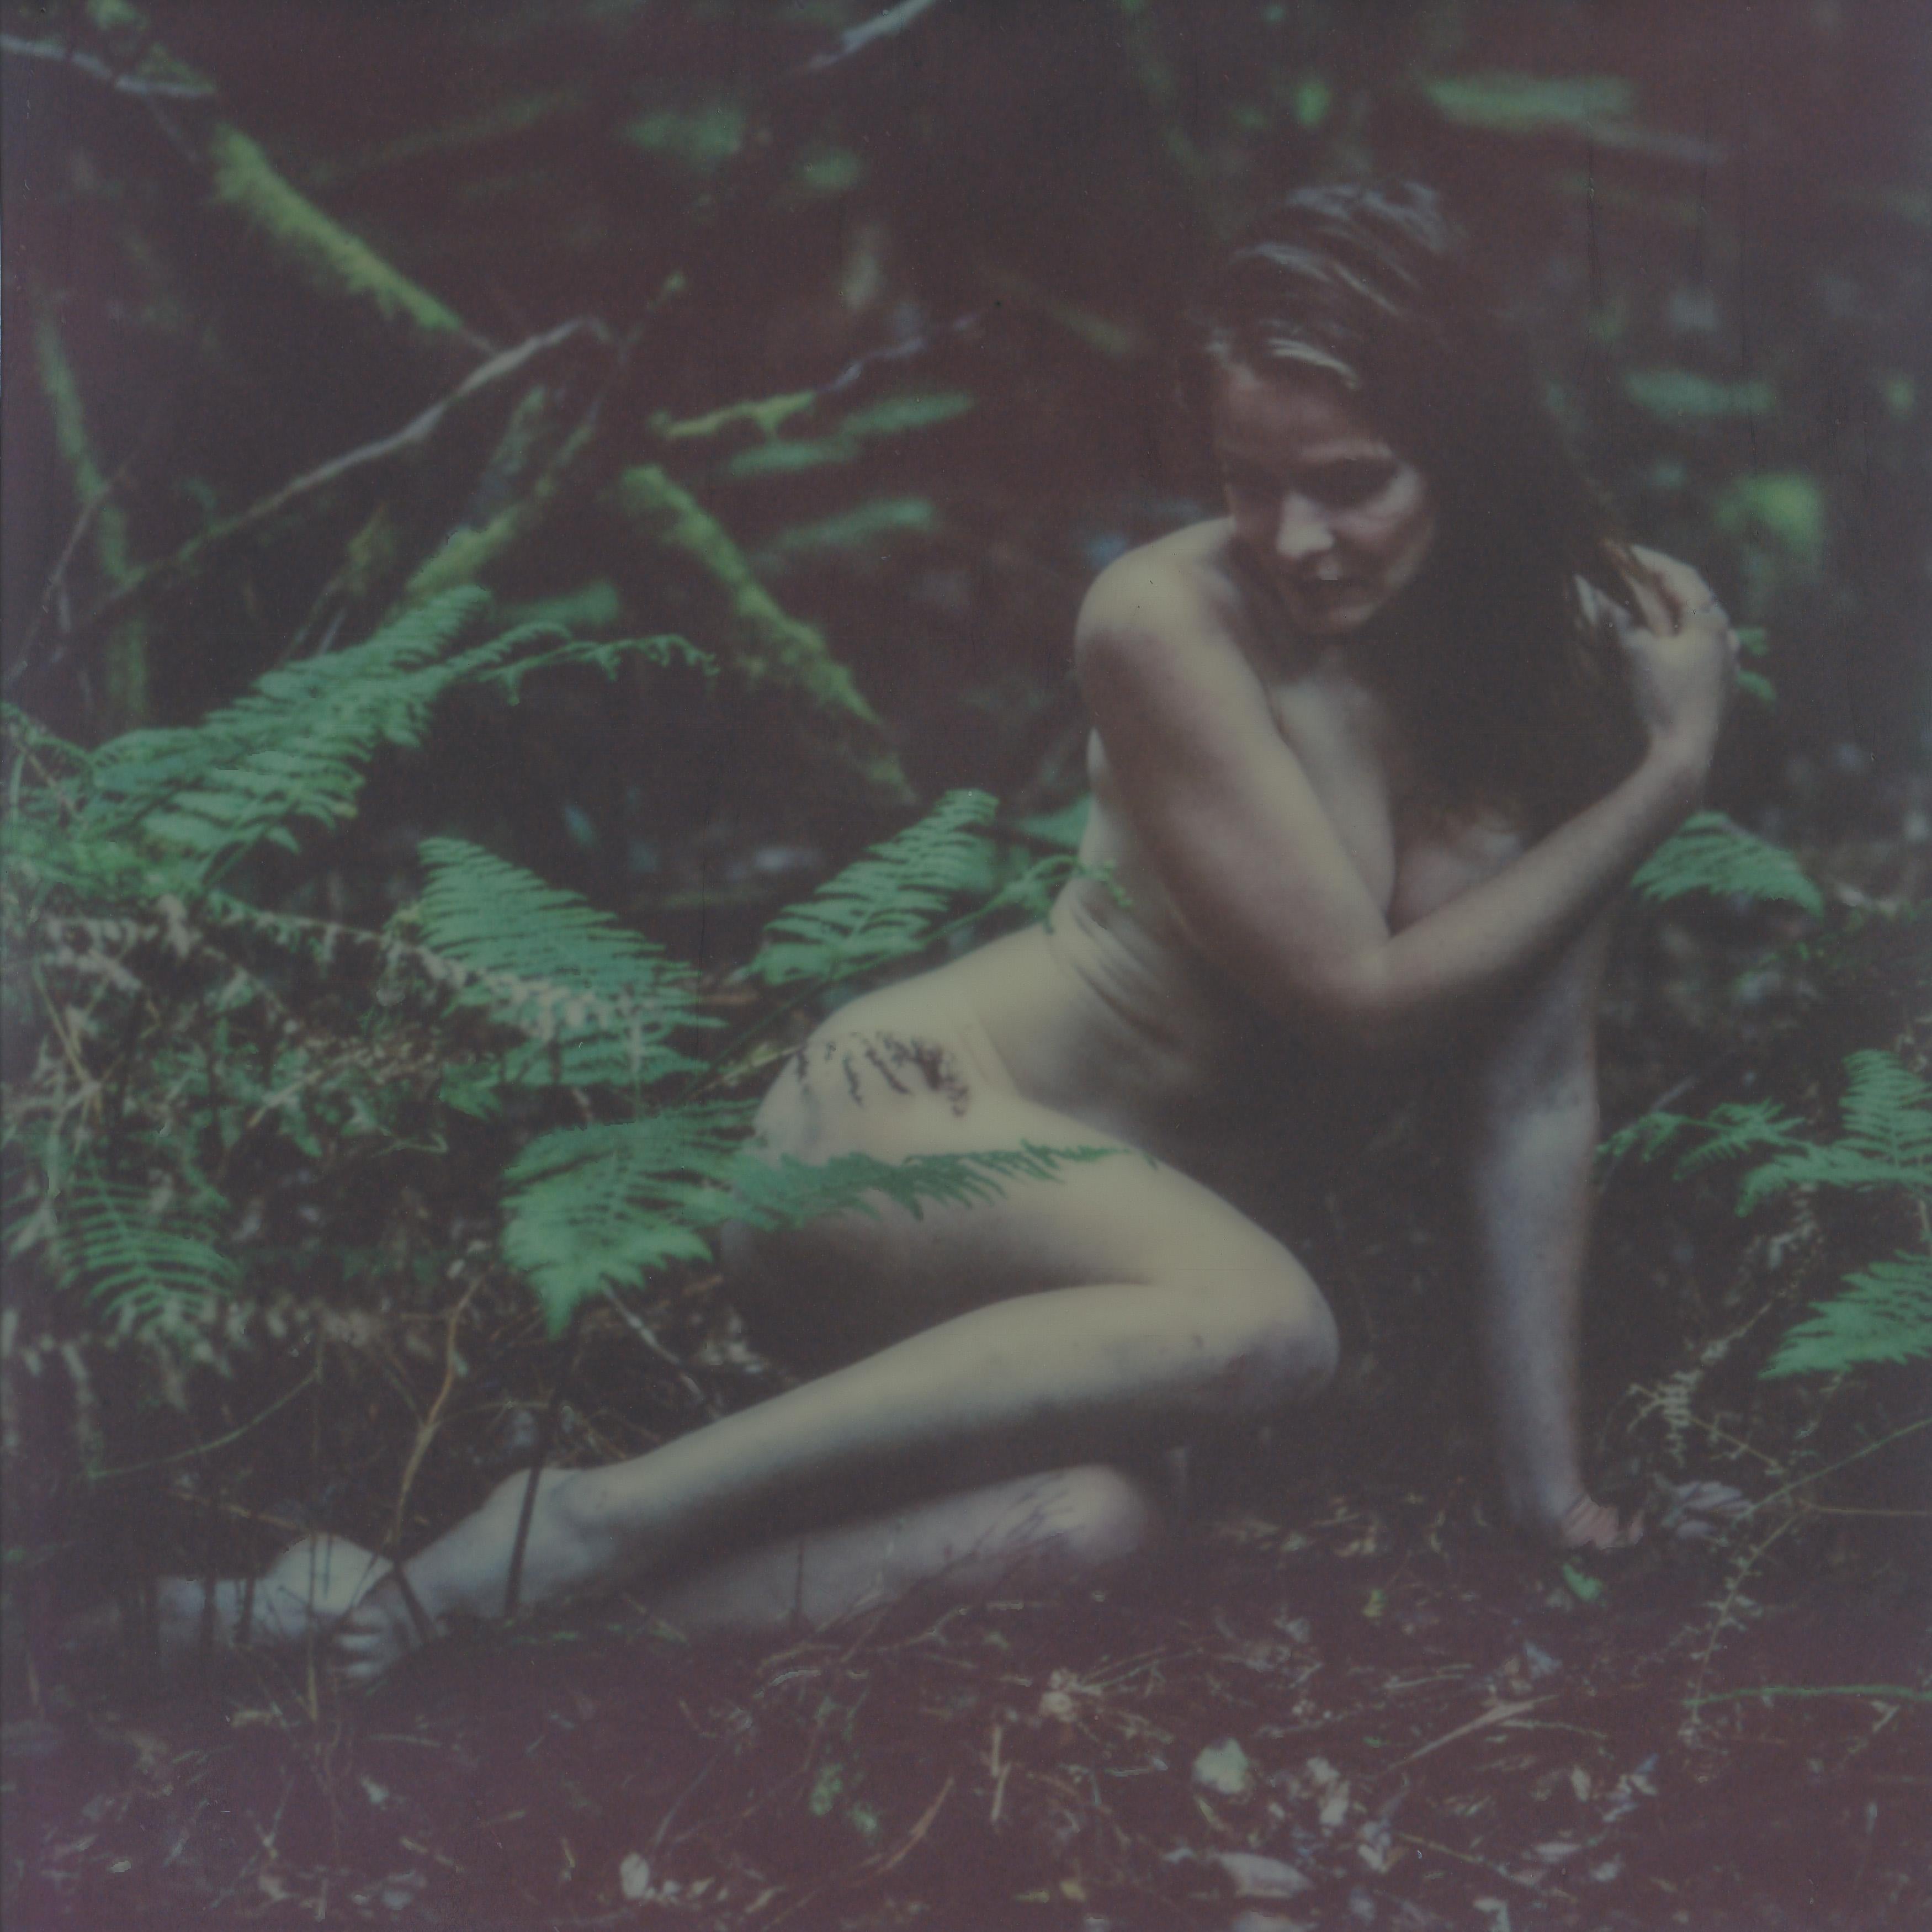 Heart of Glass - Contemporary, Nude, Women, Polaroid, 21st Century